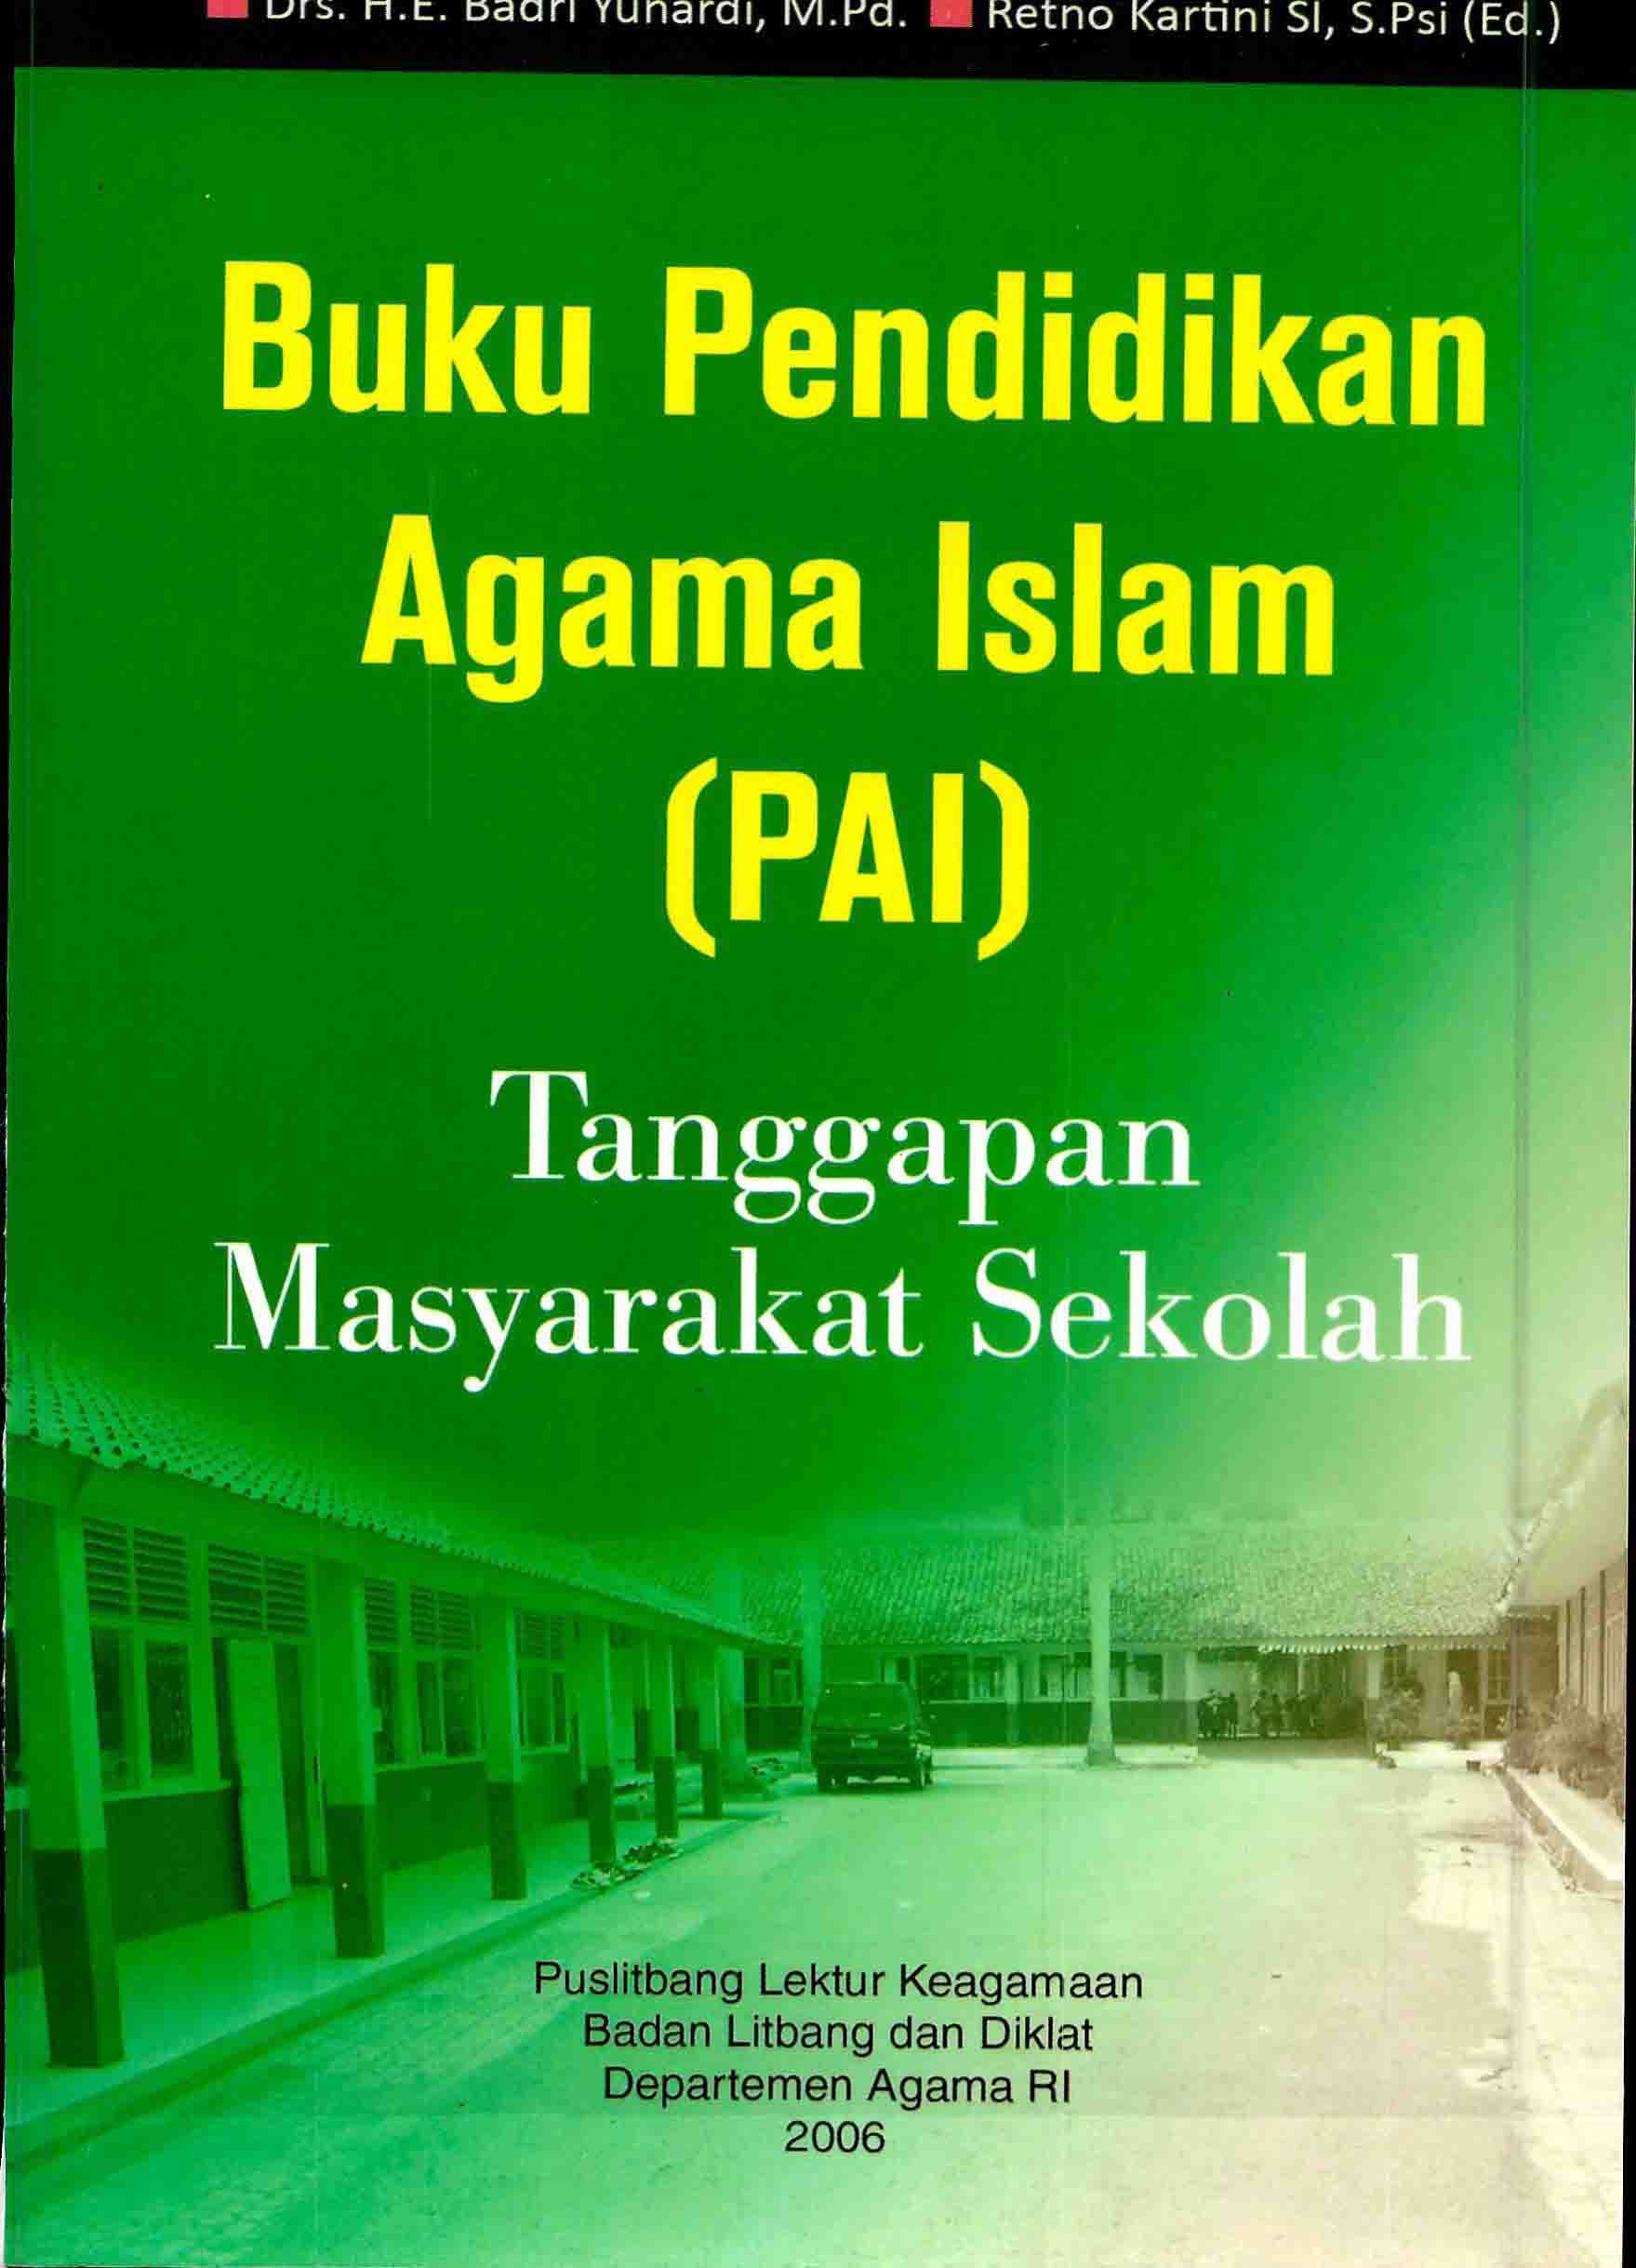 Buku Pendidikan Agama Islam (PAI) Tanggapan Masyarakat Sekolah 